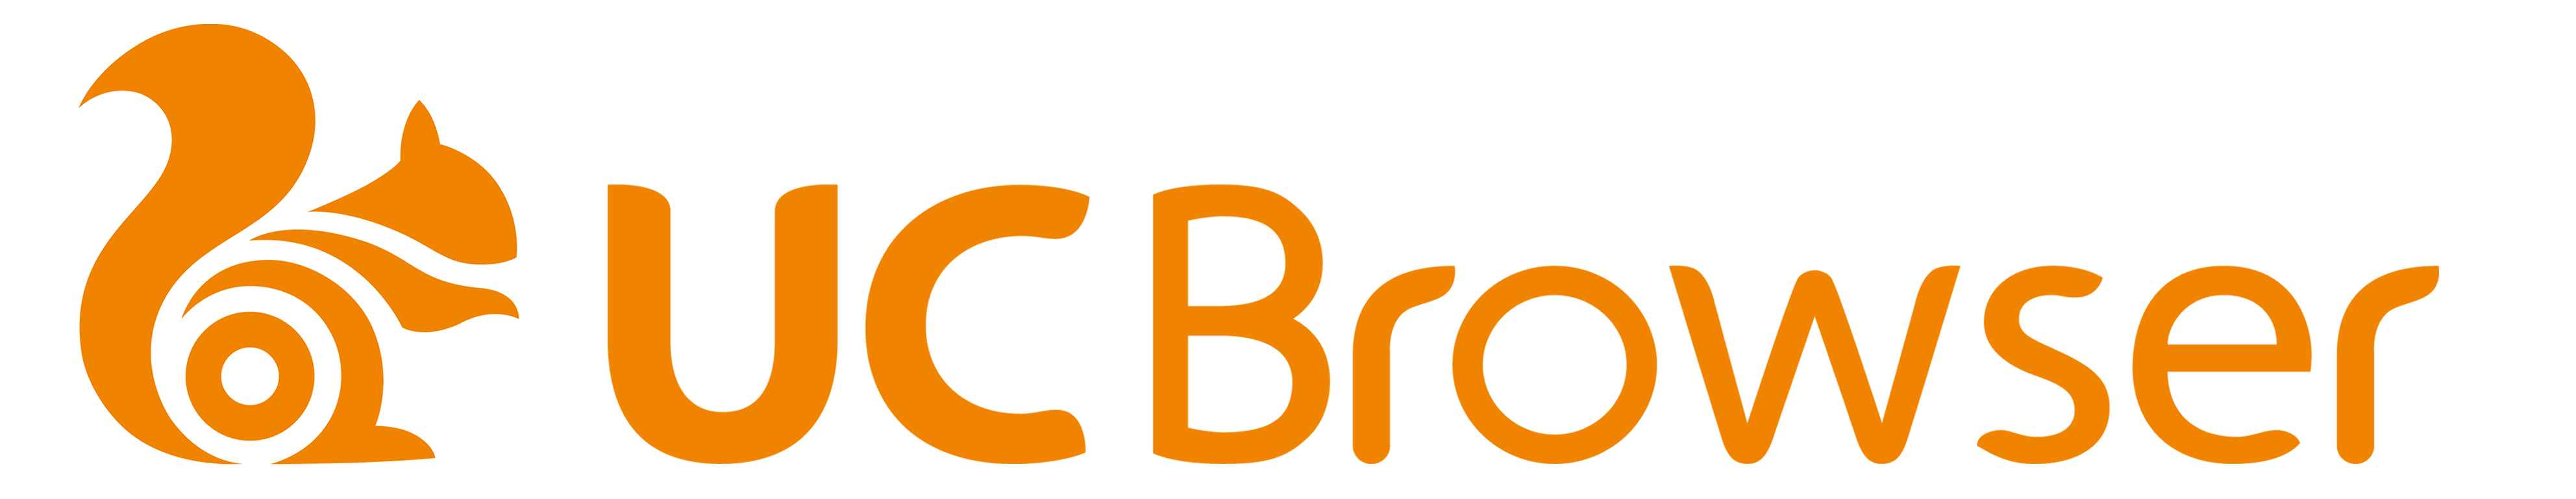 UC Browser Logo - Uc Browser Logo